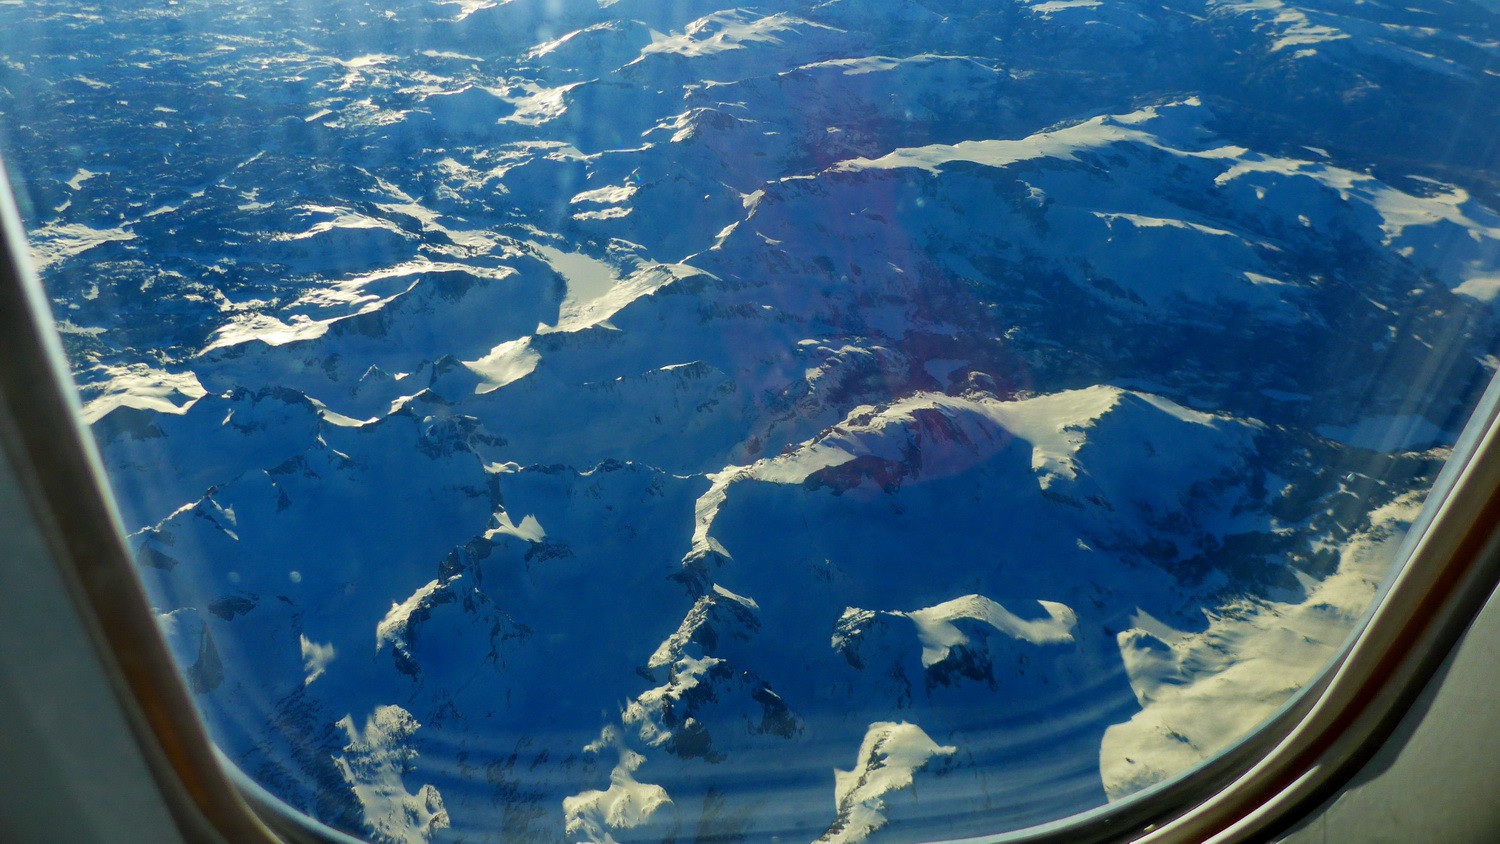 Snowy Rocky Mountains seen from our flight Las Vegas to Frankfurt